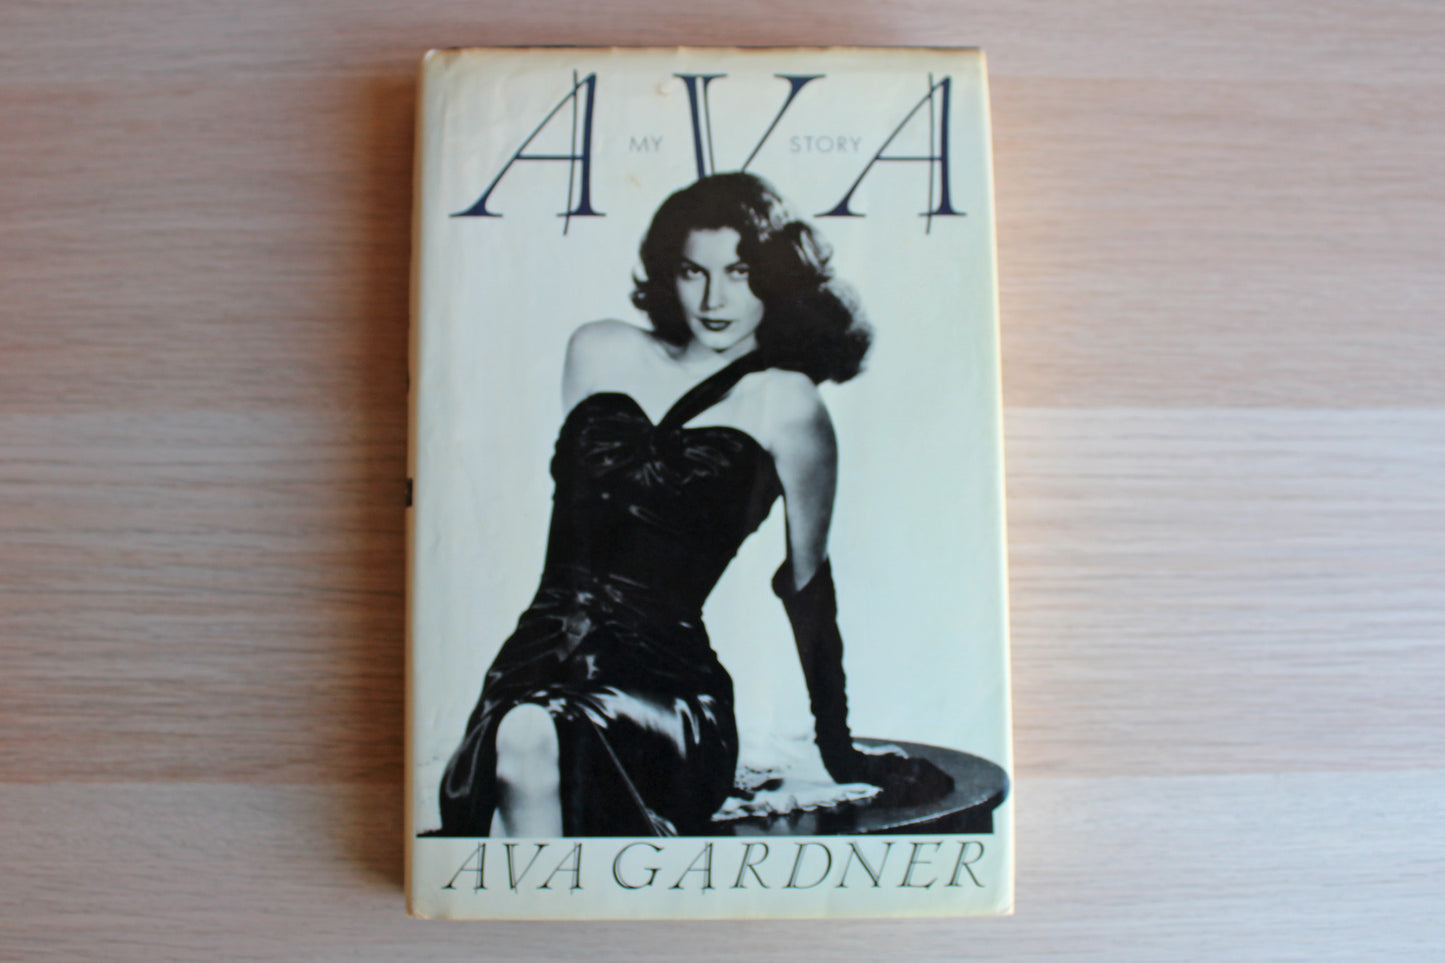 Ava:  My Story by Ava Gardner